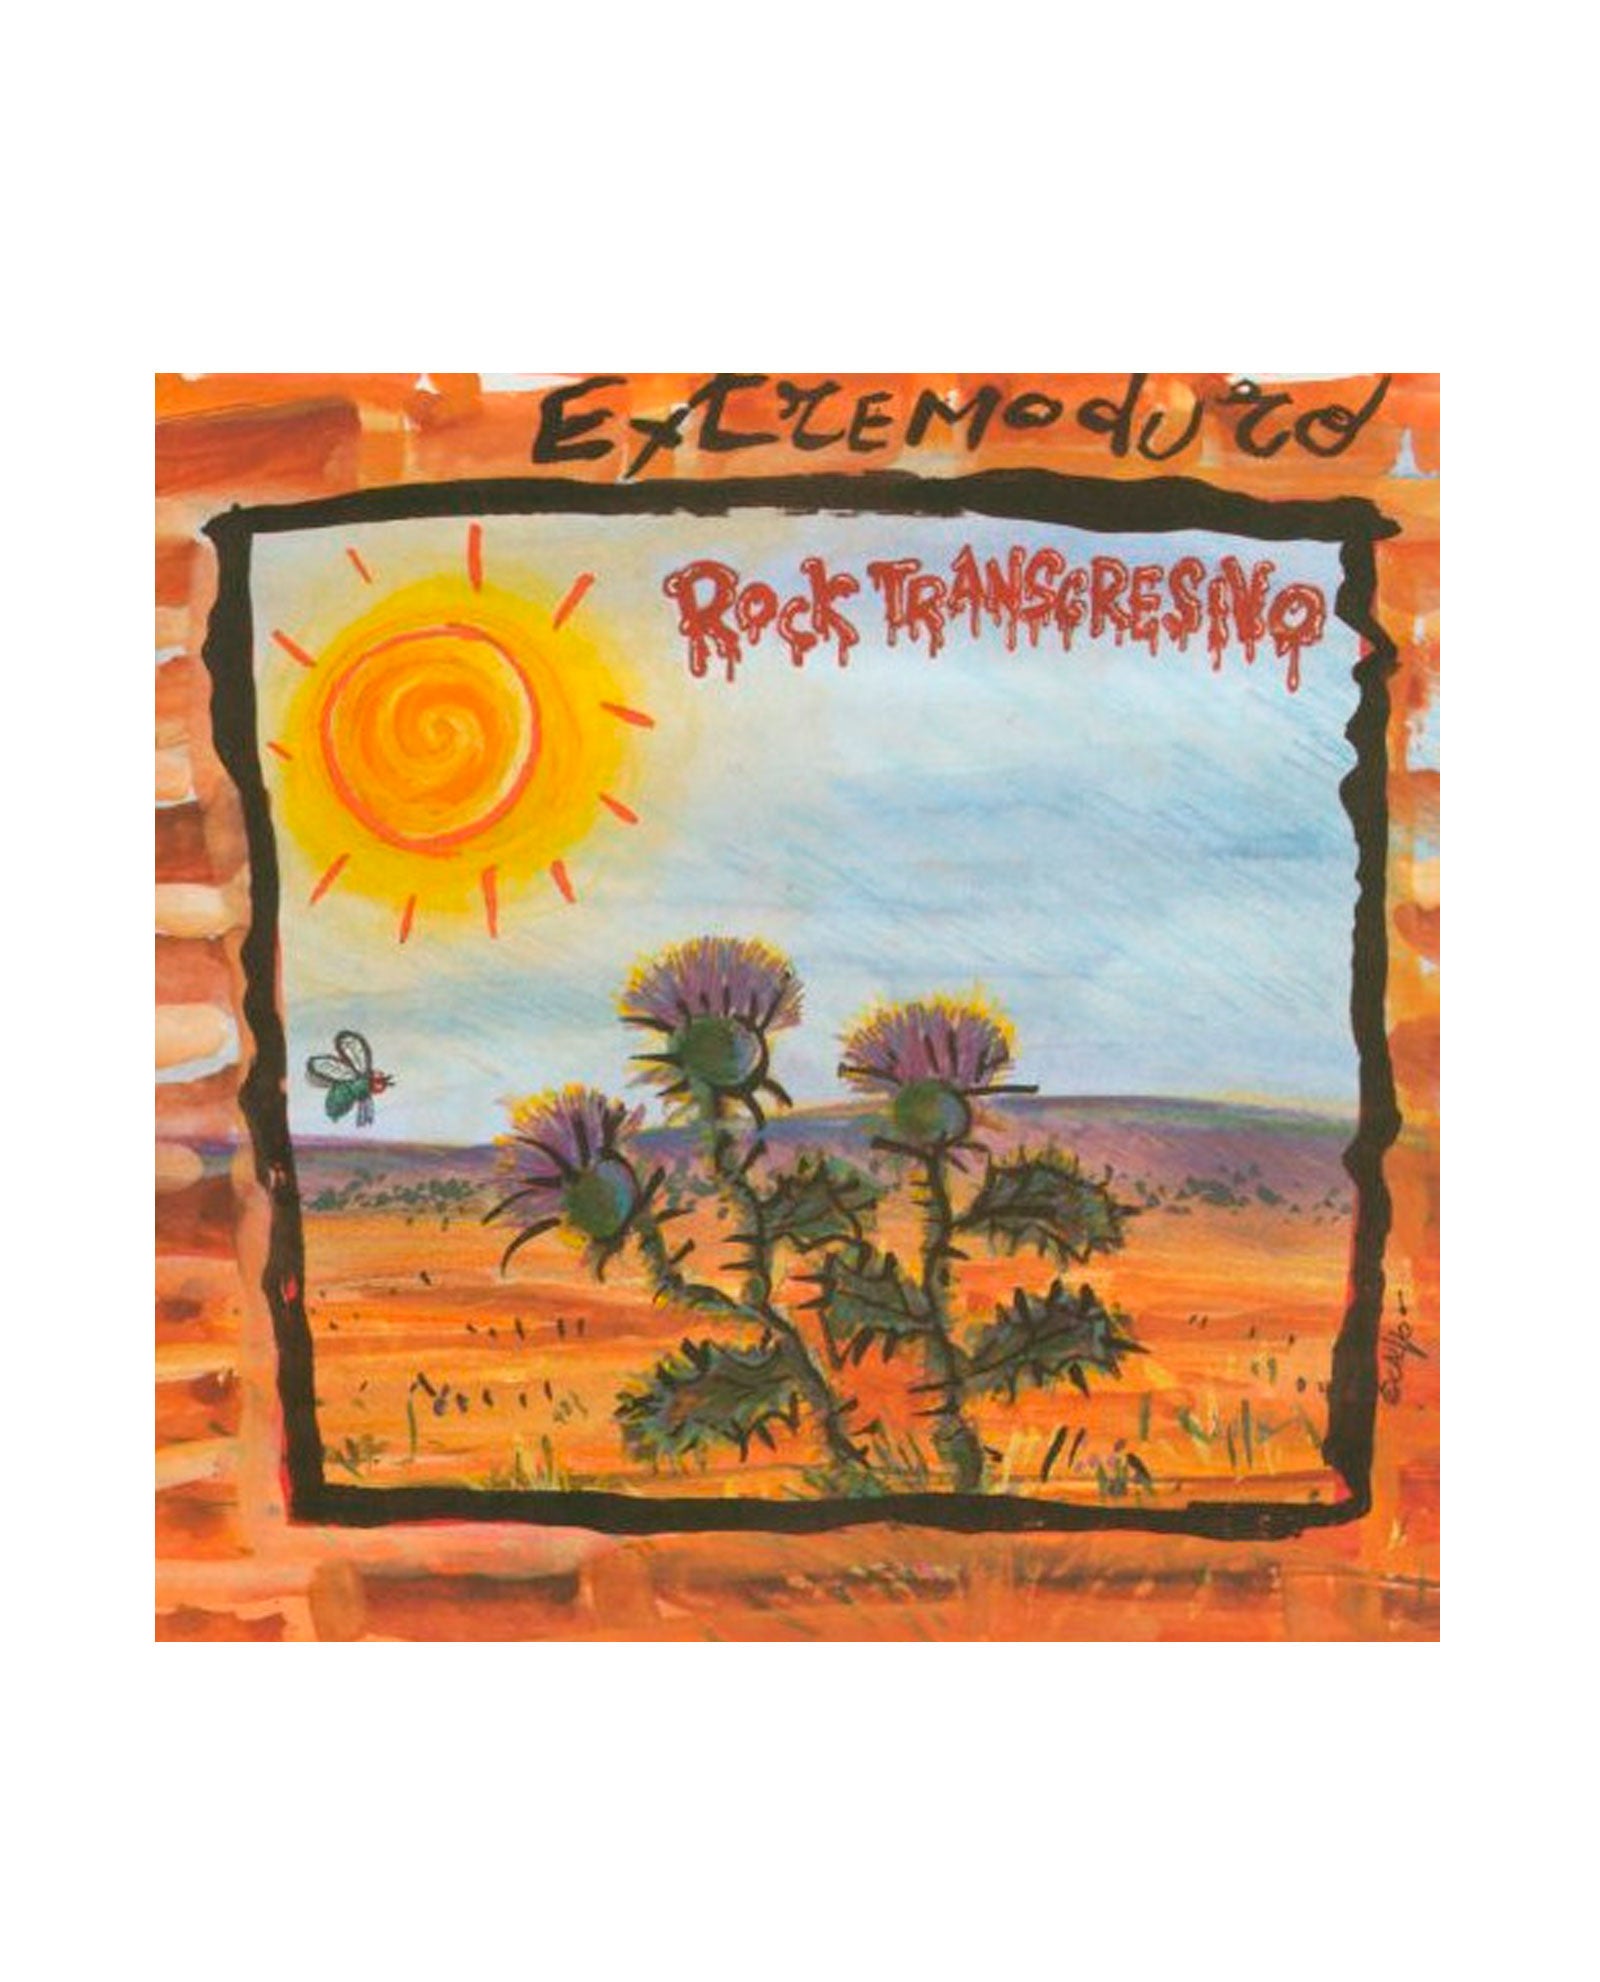 Extremoduro LP Vinilo + CD Rock Transgresivo